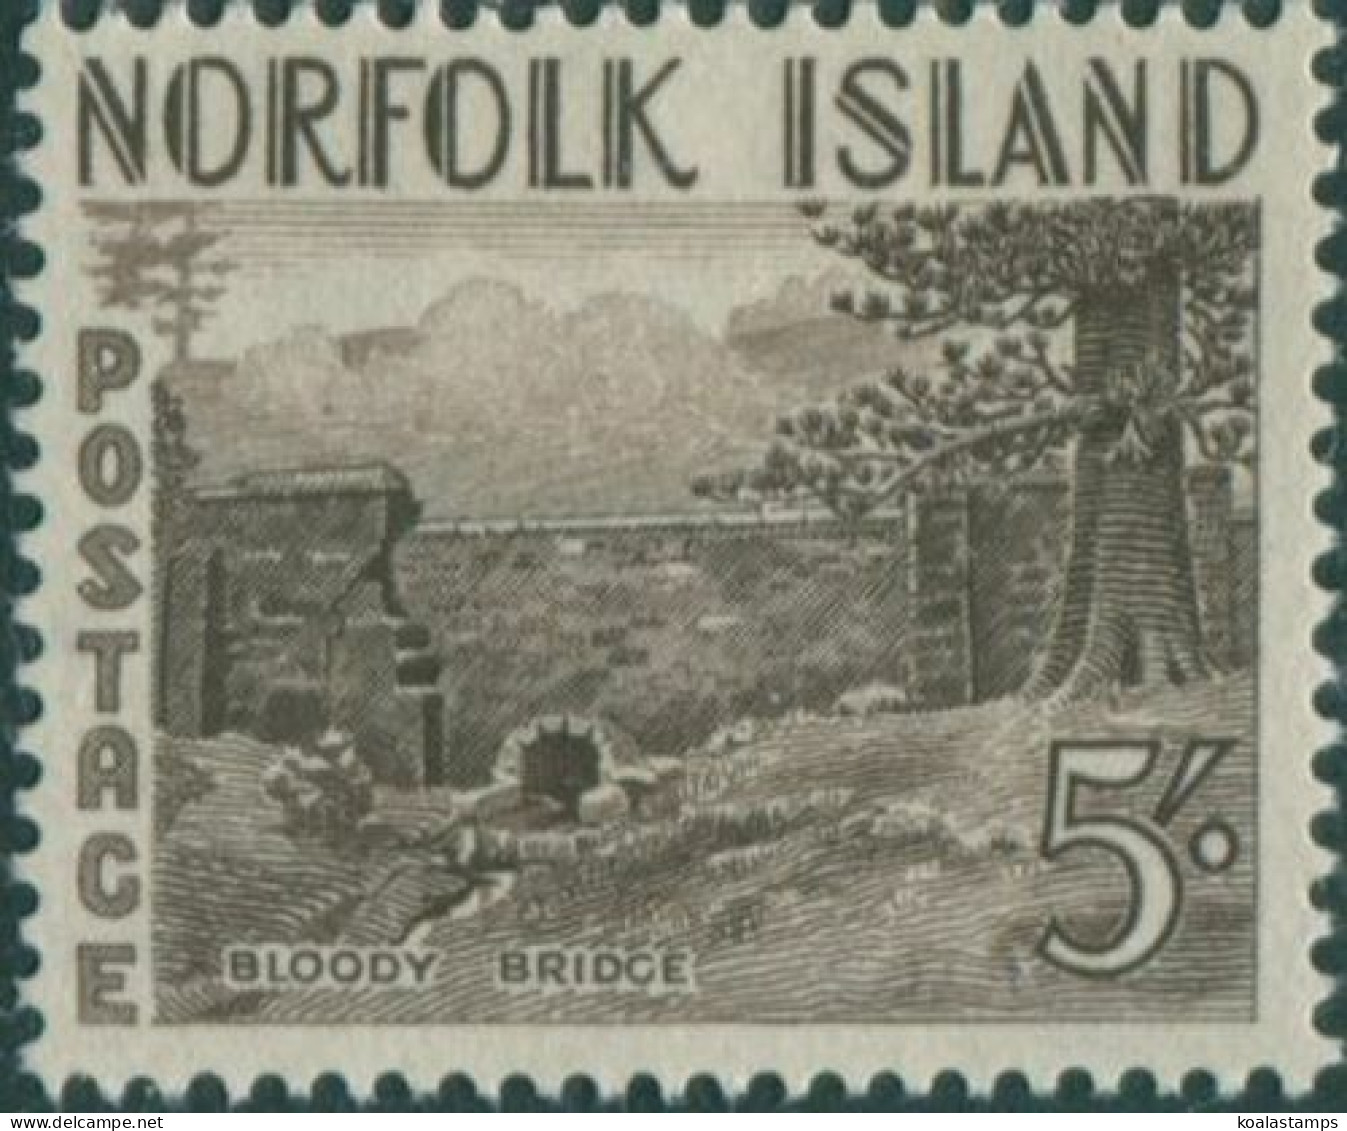 Norfolk Island 1953 SG18 5/- Brown Bloody Bridge MNH - Norfolkinsel